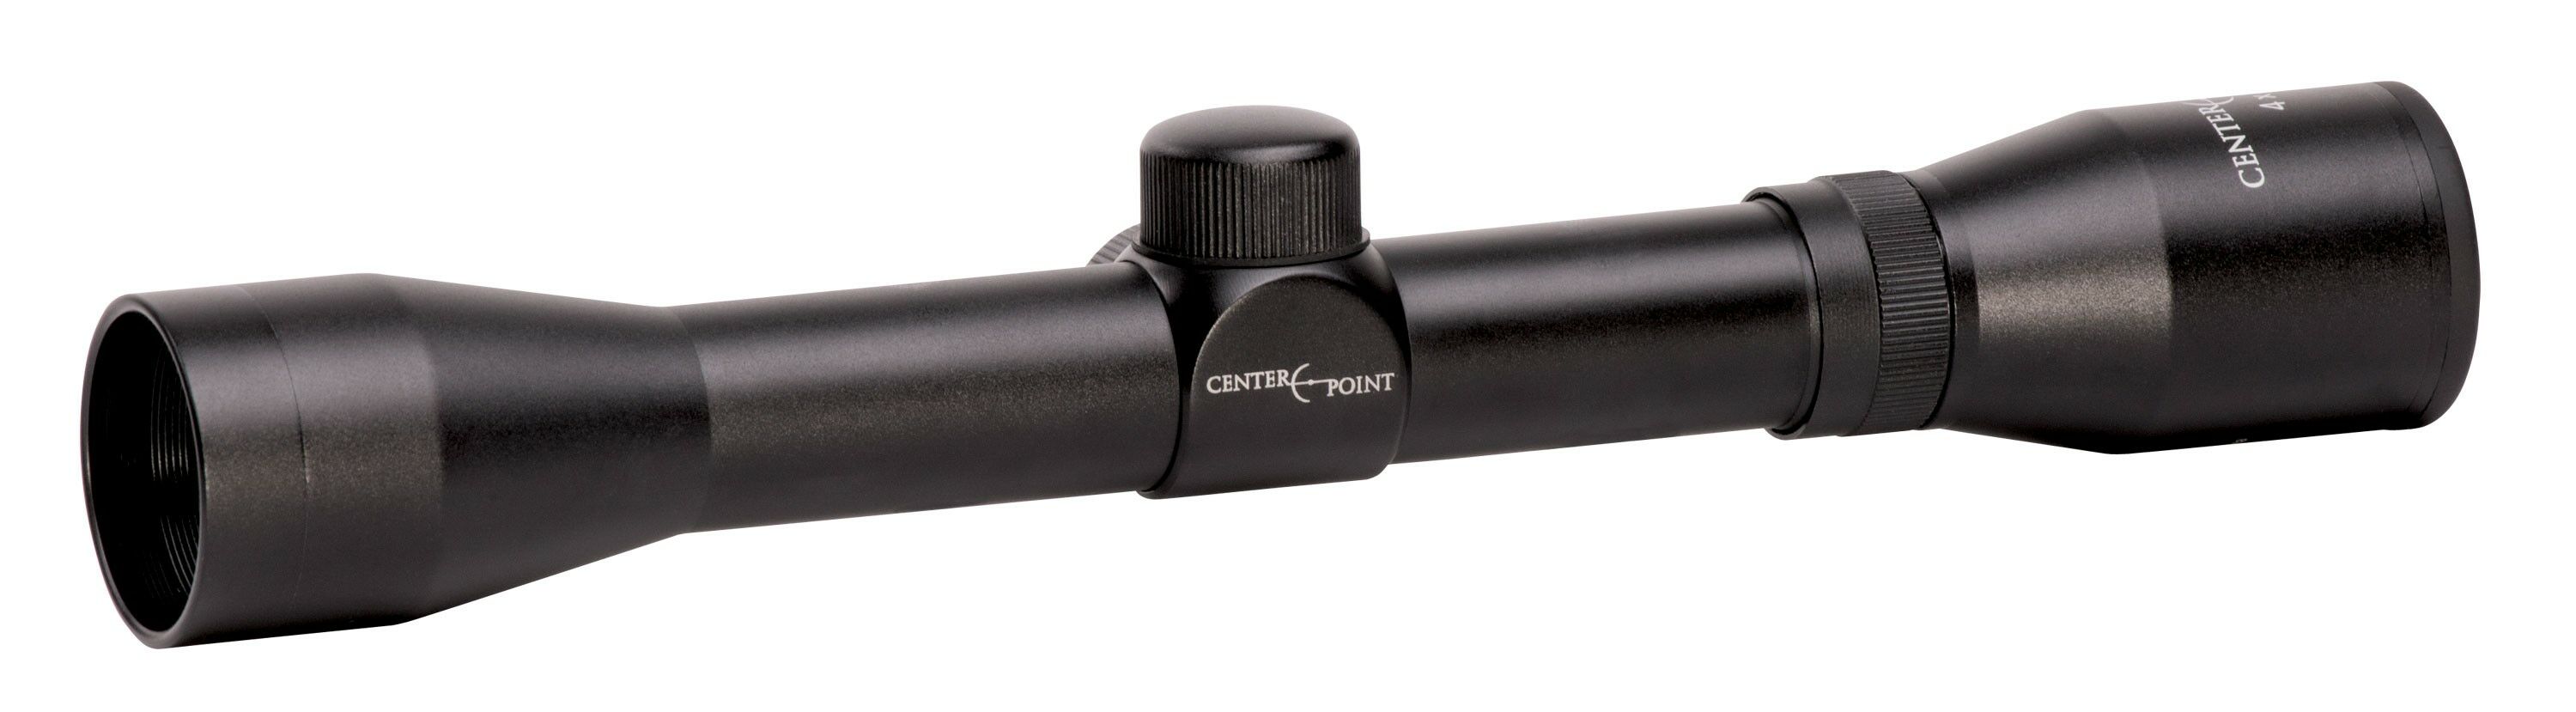 4x32 mm Centerpoint Rimfire Airgun Scope